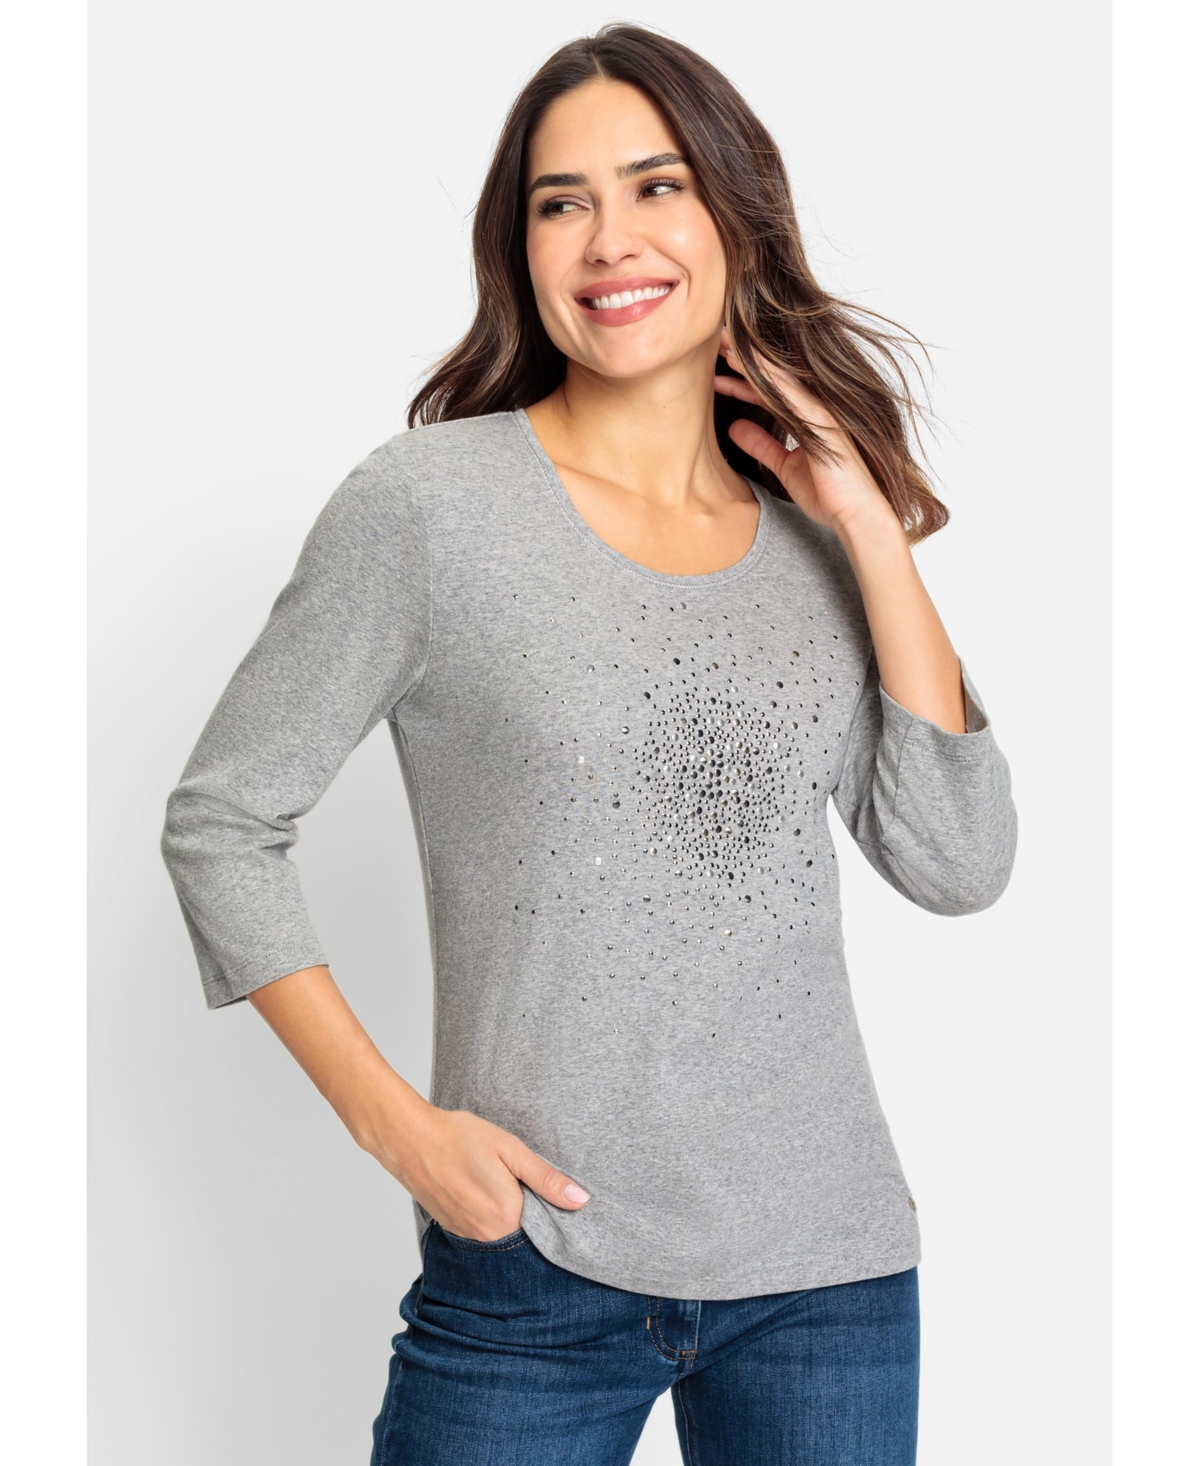 100% Cotton 3/4 Sleeve Studded T-Shirt - Silver grey melange